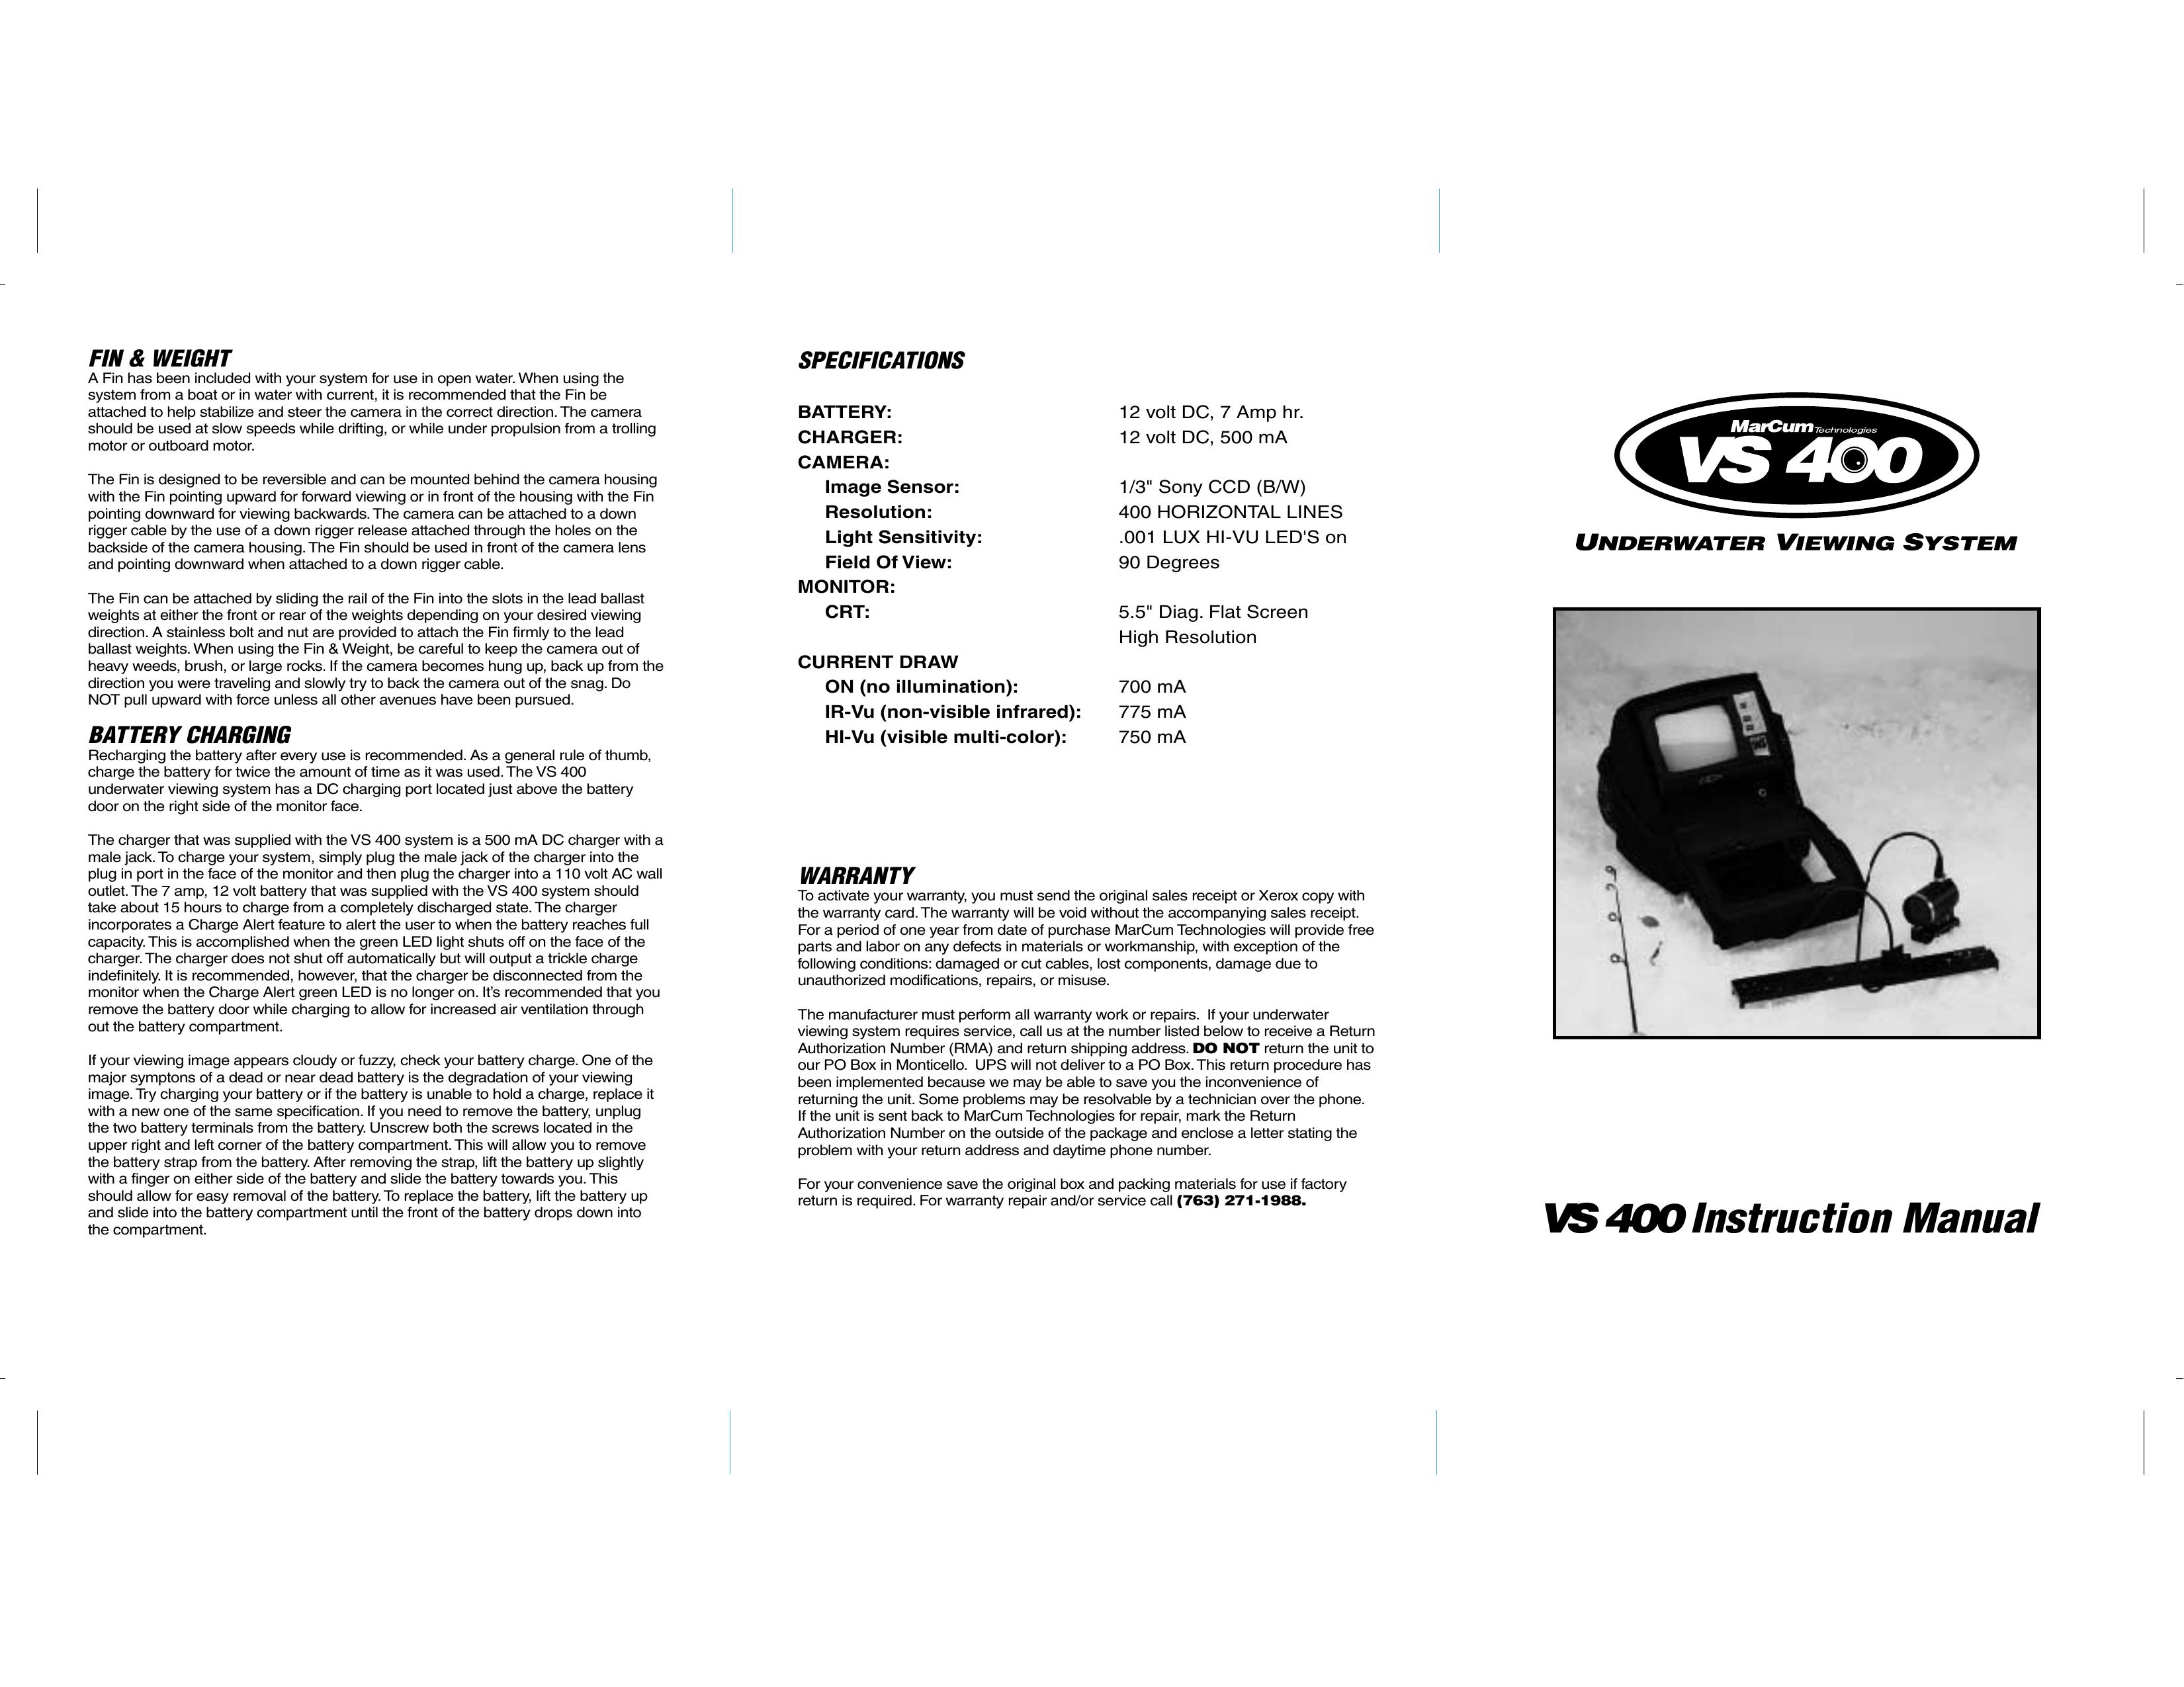 Marcum Technologies VS 400 Film Camera User Manual